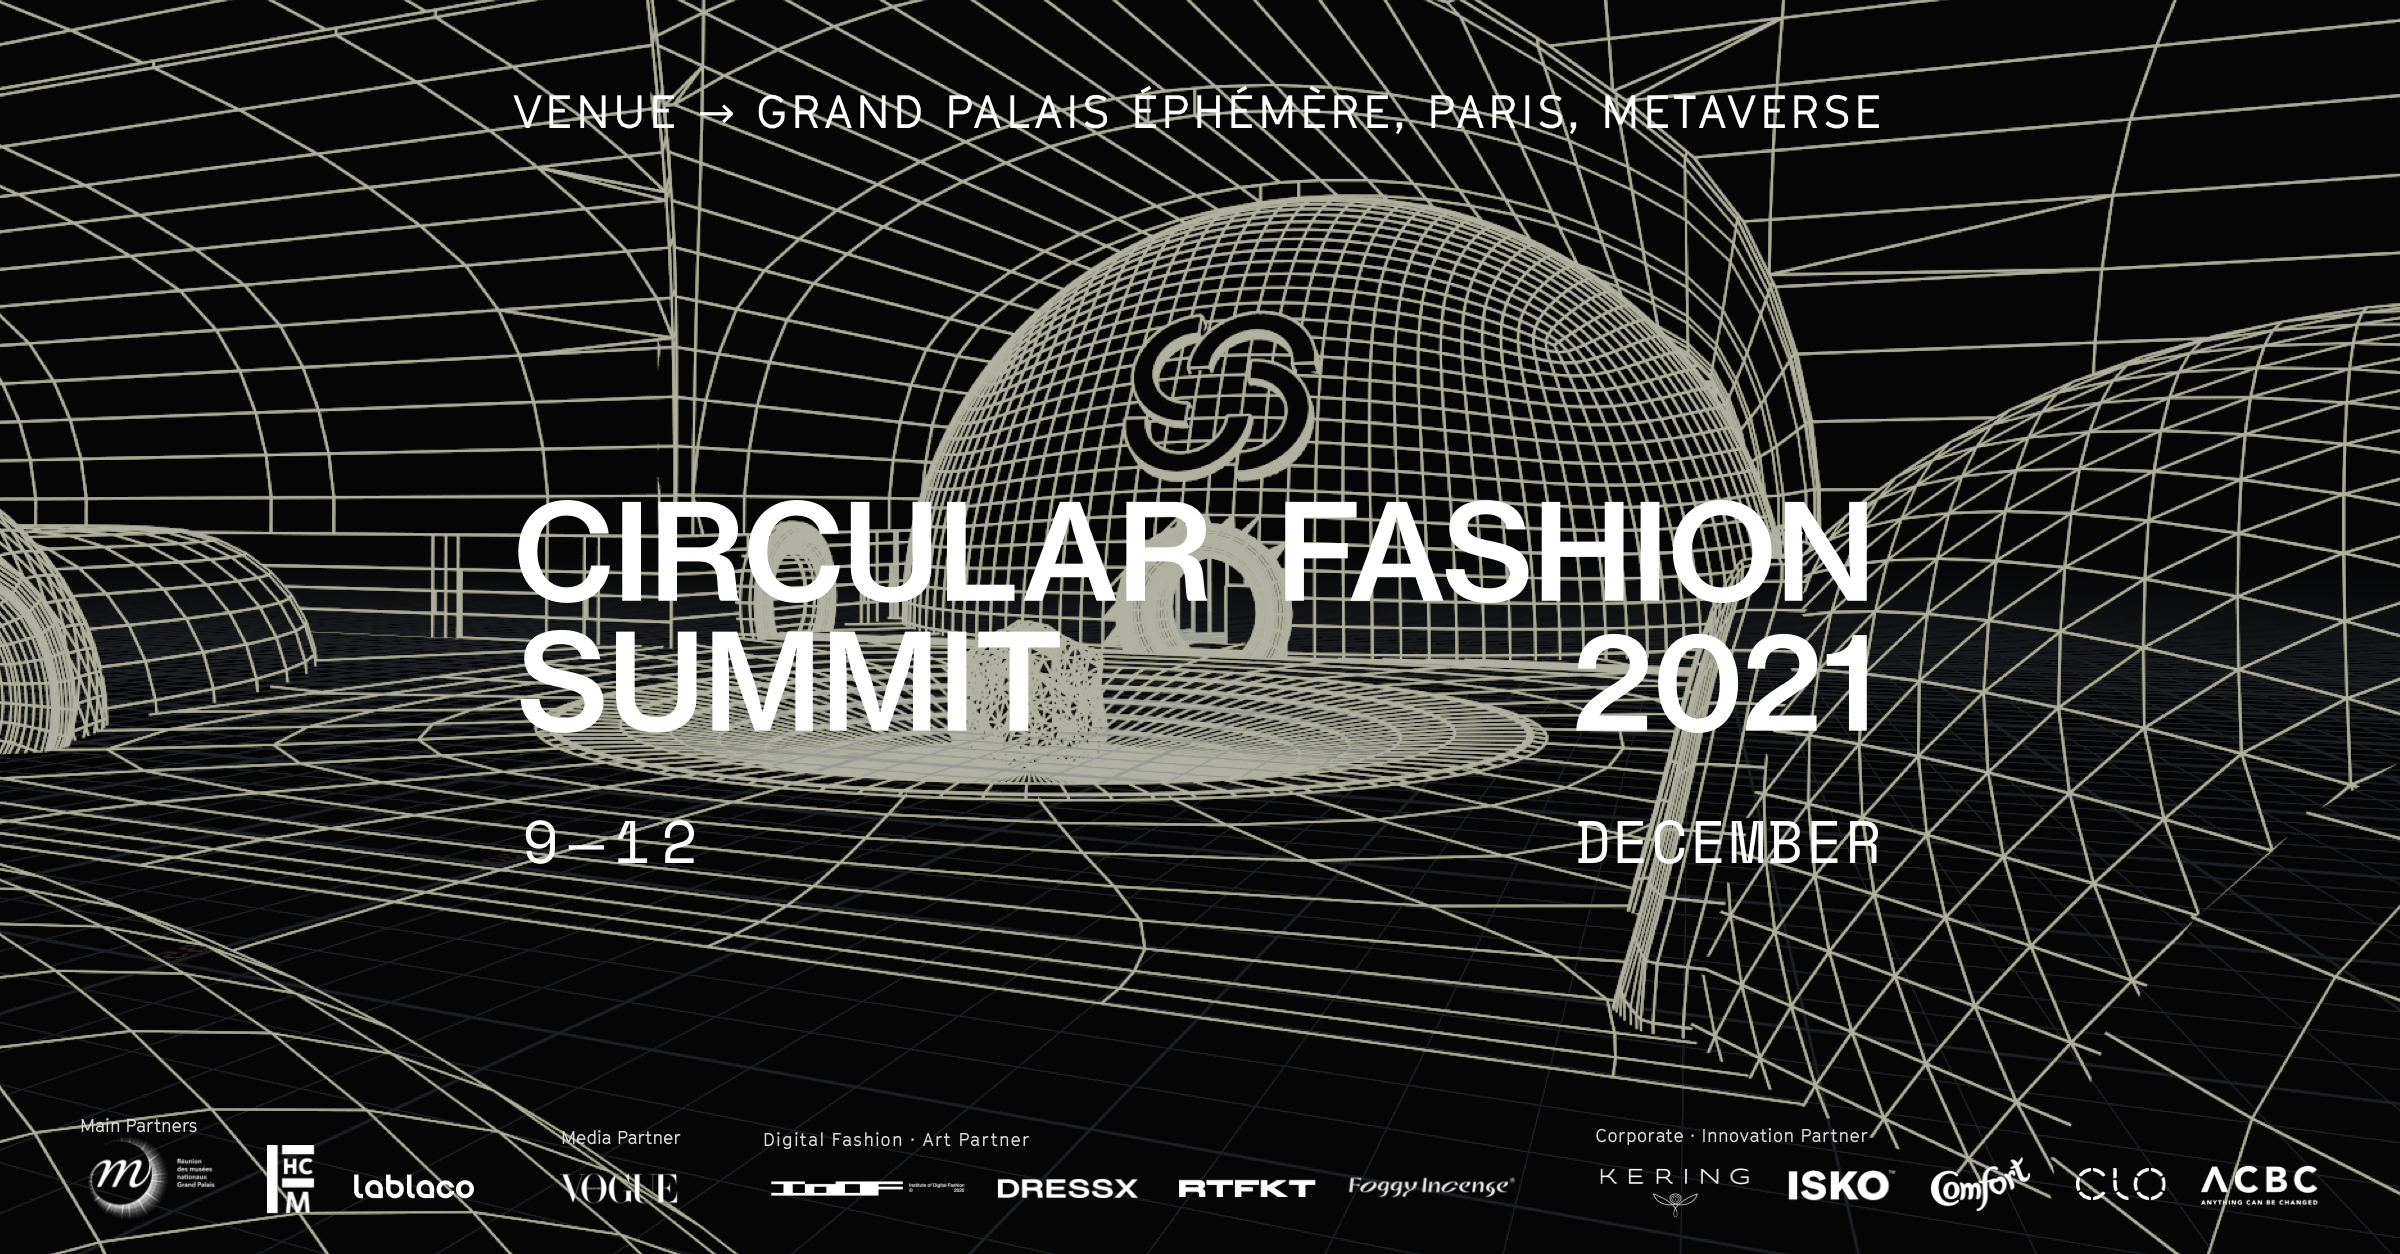 invitation to circular fashion summit 2021